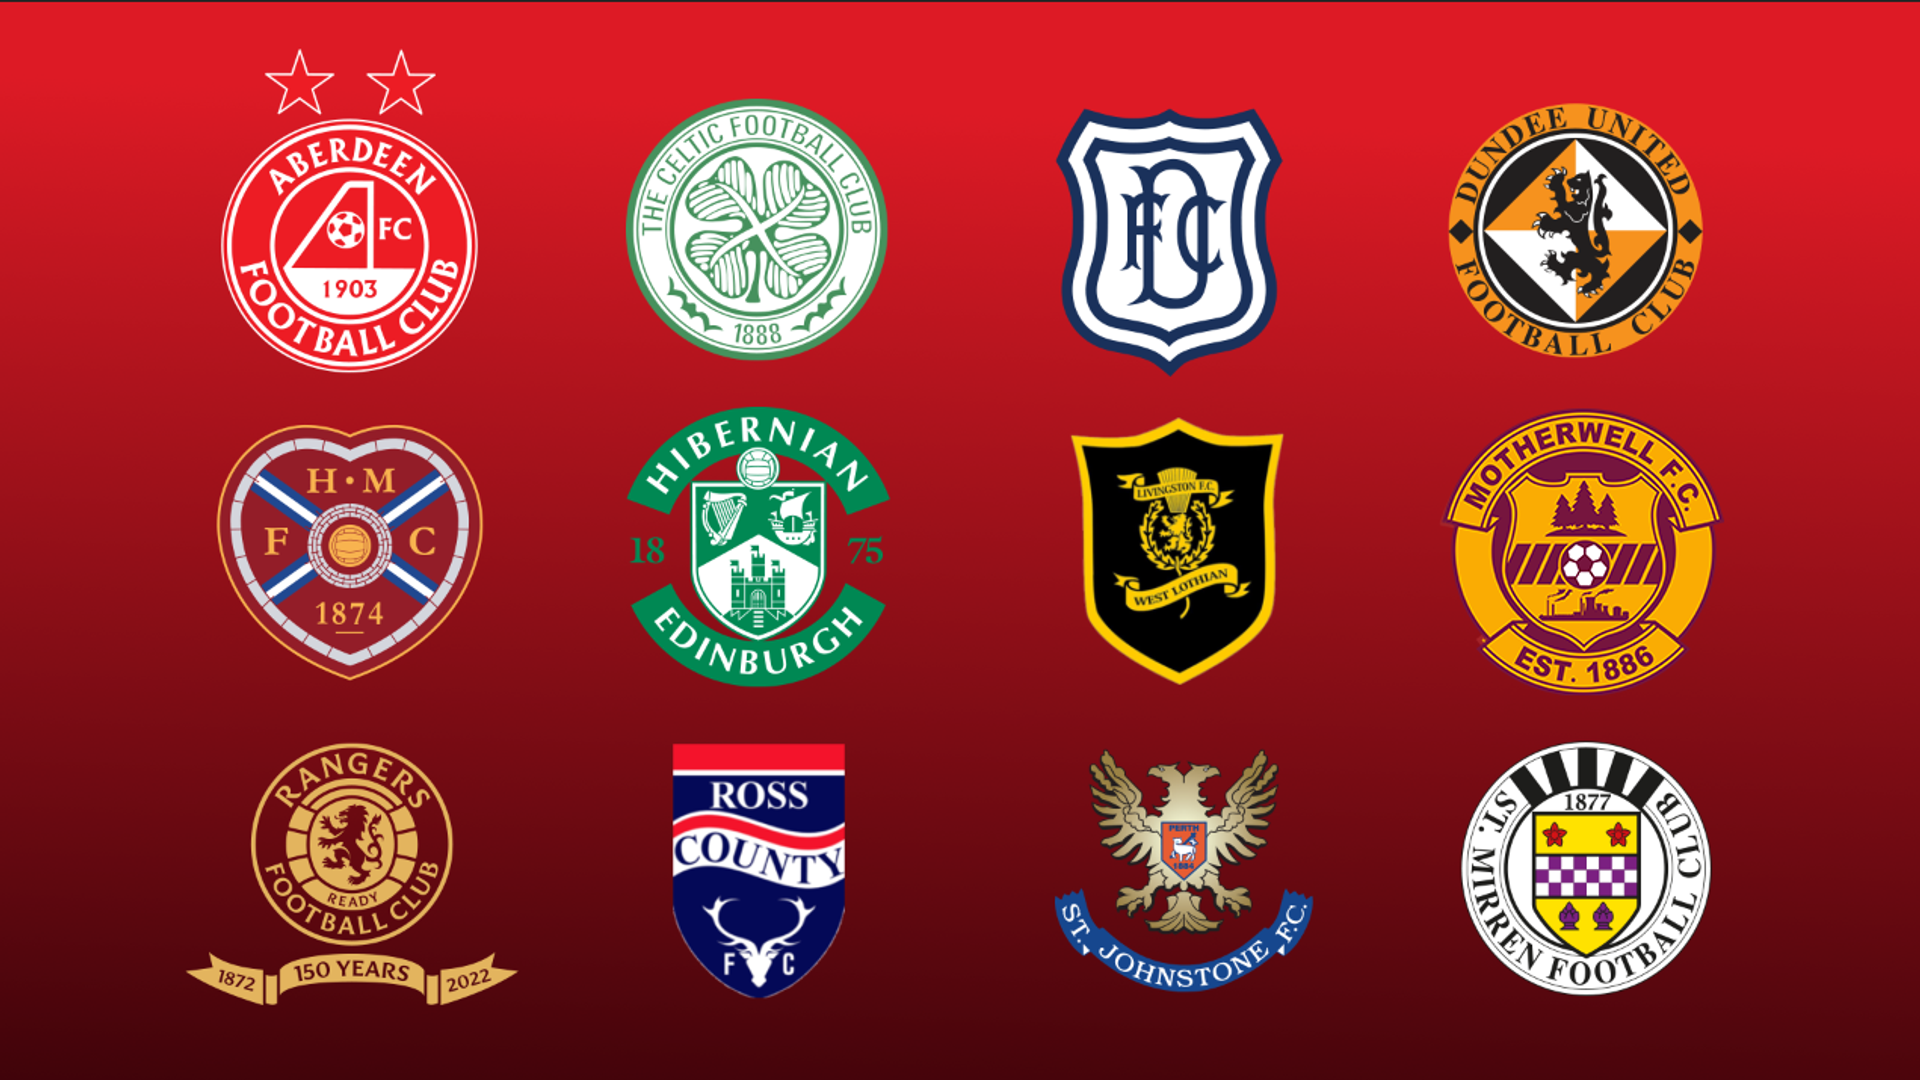 Scottish Premiership previews: Rangers host Ross County